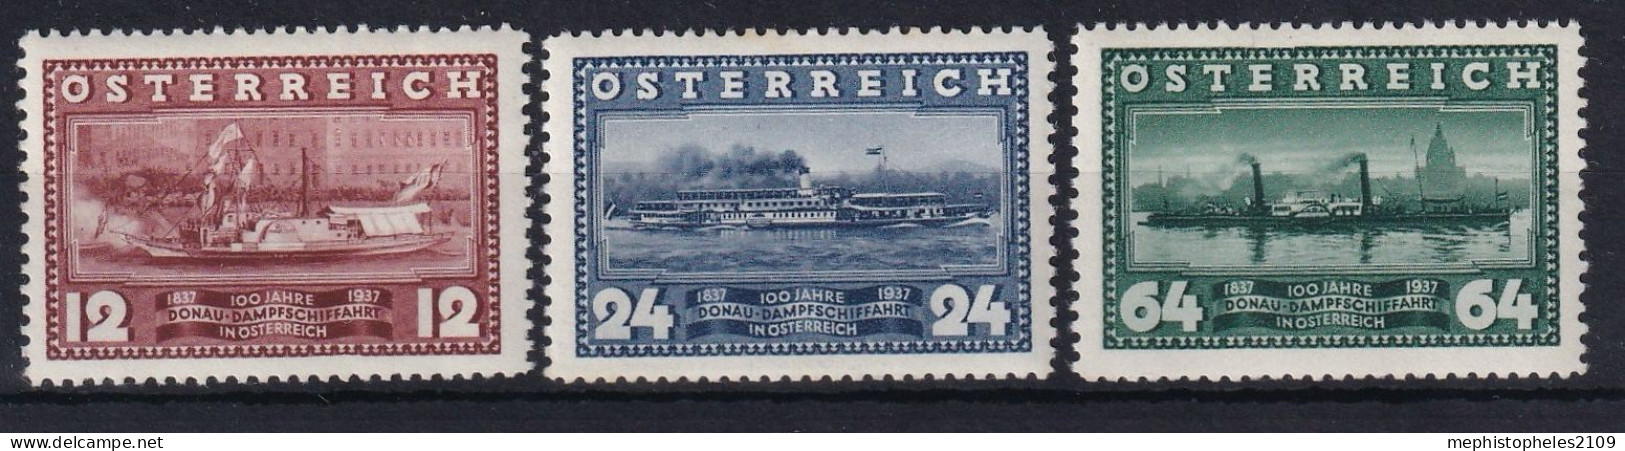 AUSTRIA 1937 - MNH - ANK 639-641 - Nuovi